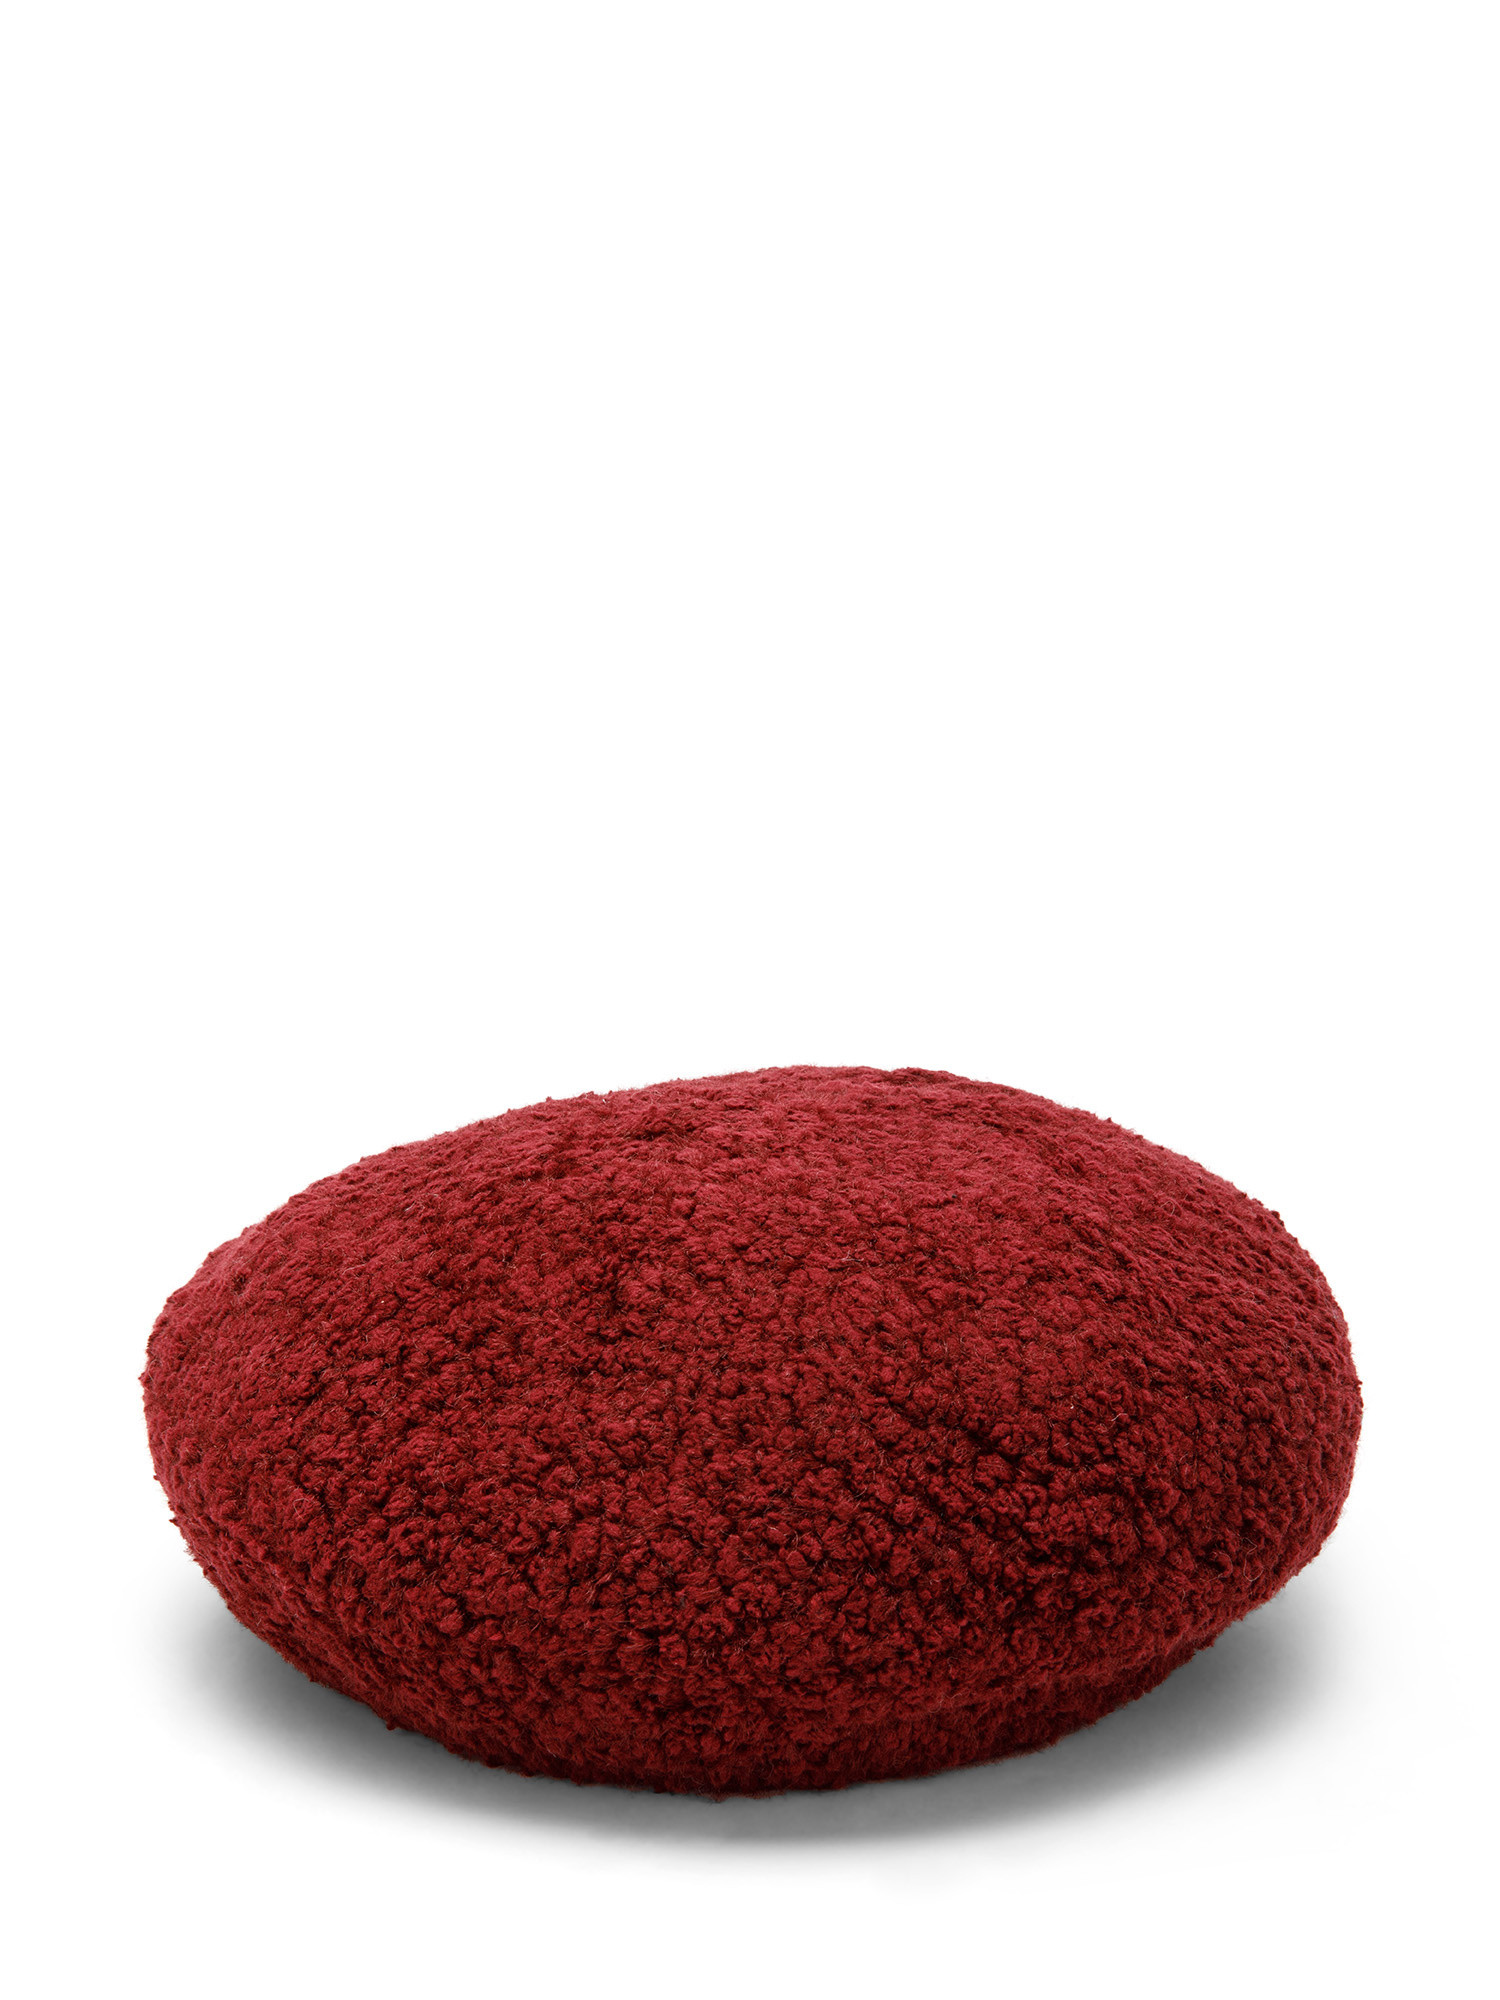 Koan - Basco effetto pelliccia, Rosso scuro, large image number 0